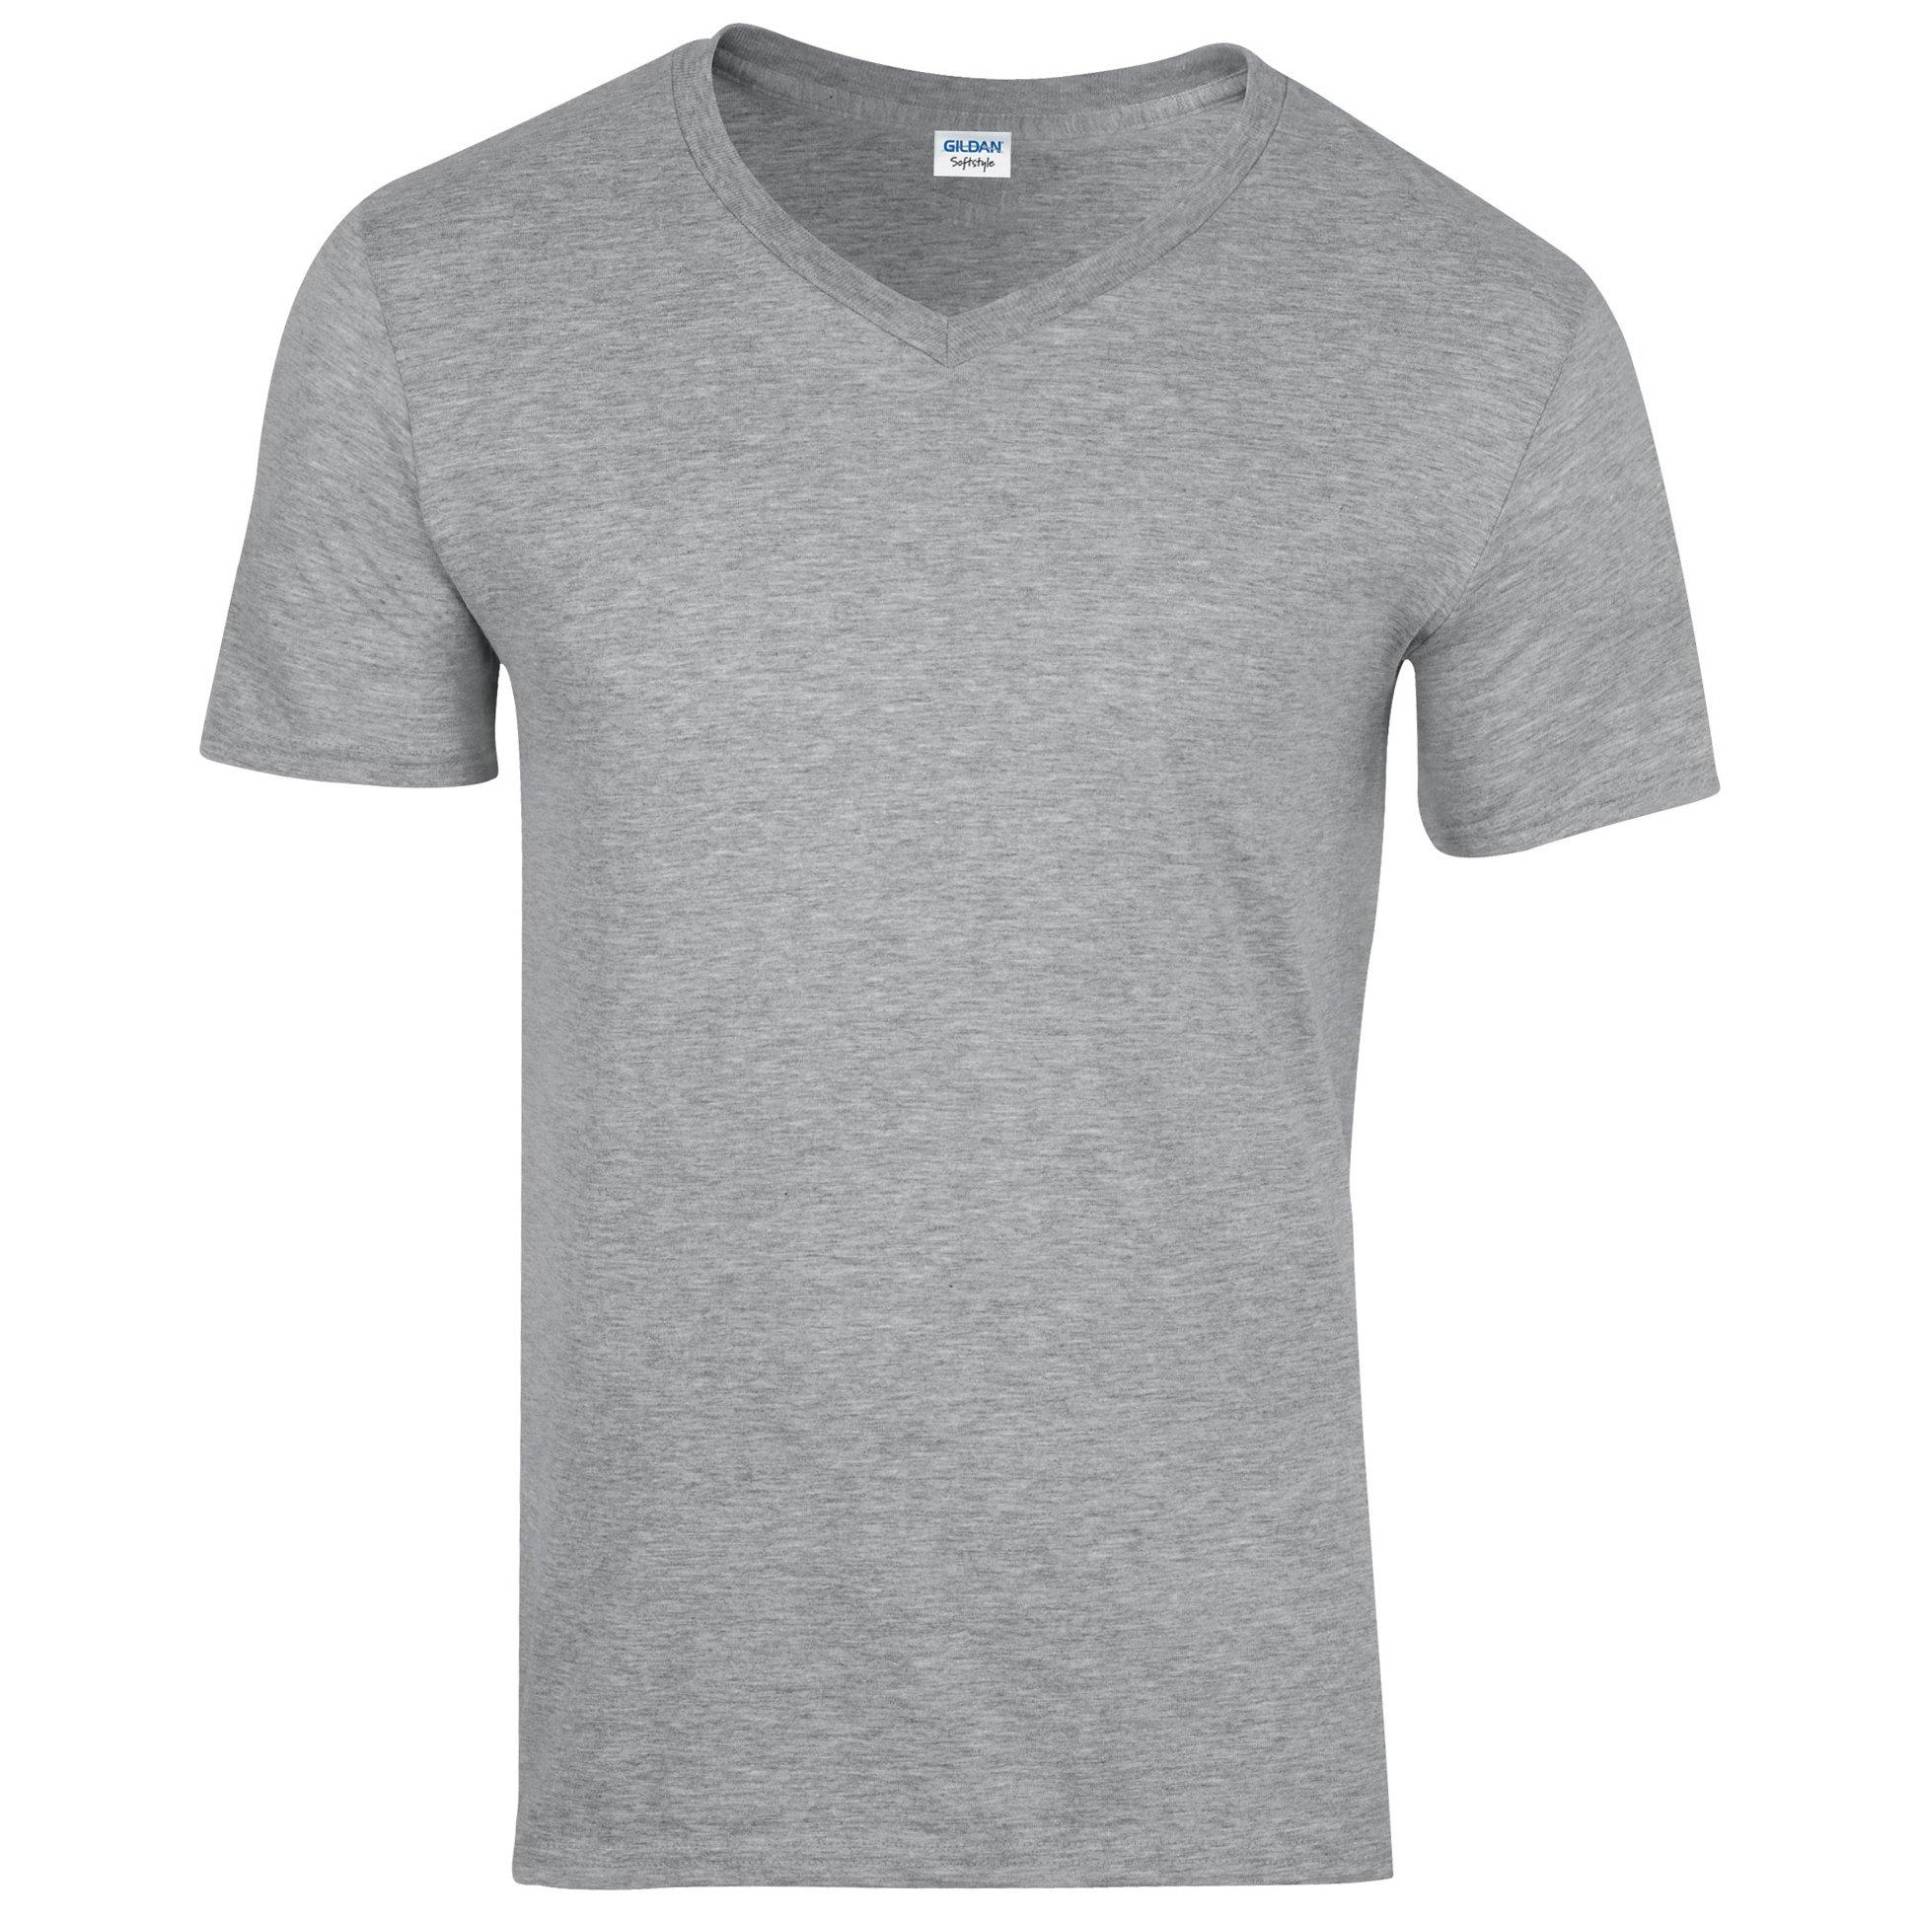 Soft Style Tshirt, Vausschnitt, Kurzarm Herren Grau XL von Gildan